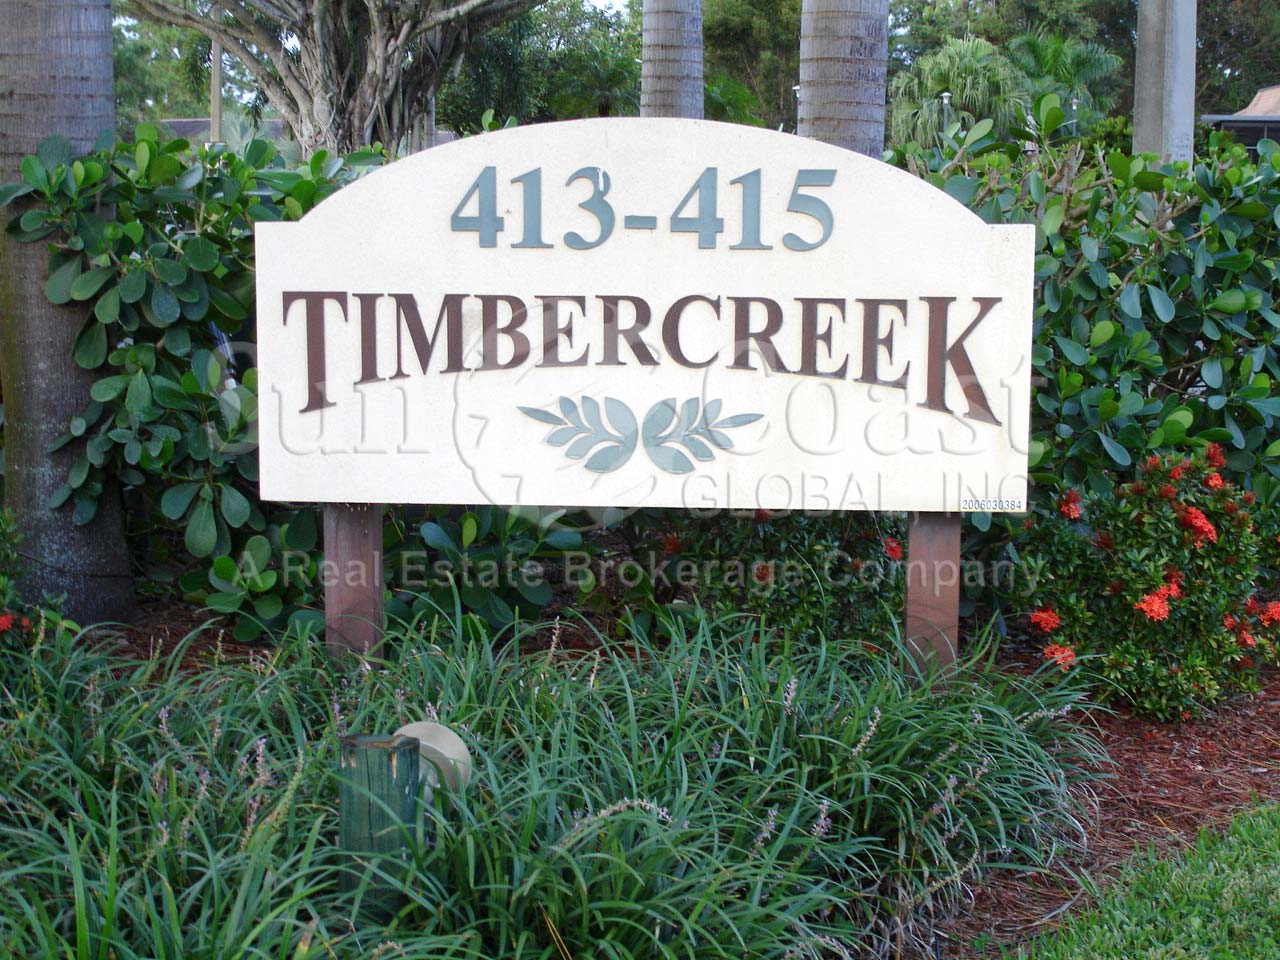 Timbercreek Signage